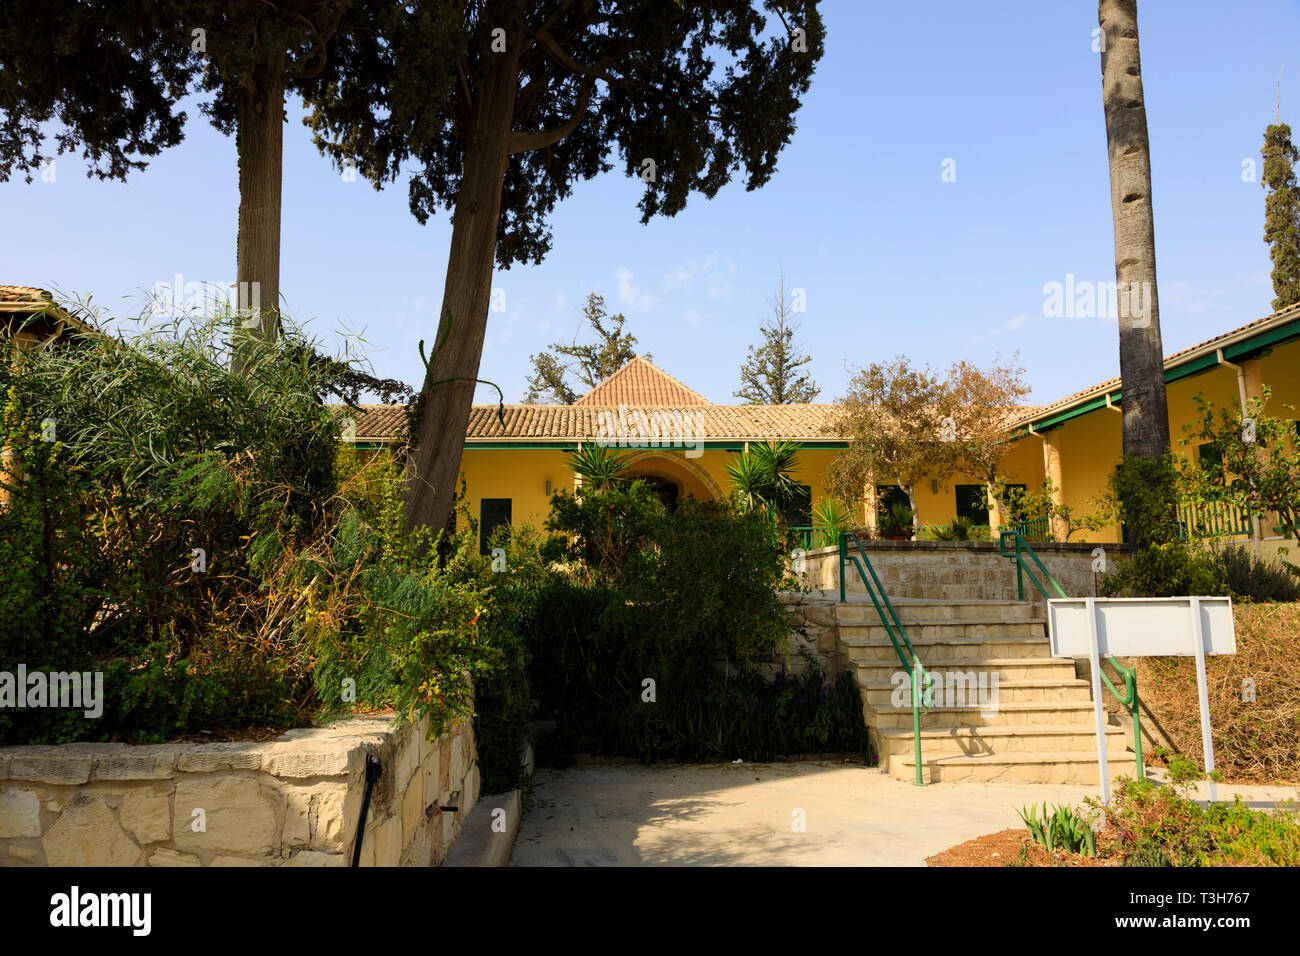 The inner courtyard of the Hala Sultan Tekke mosque, Larnaca, Cyprus October 2018 Stock Photo